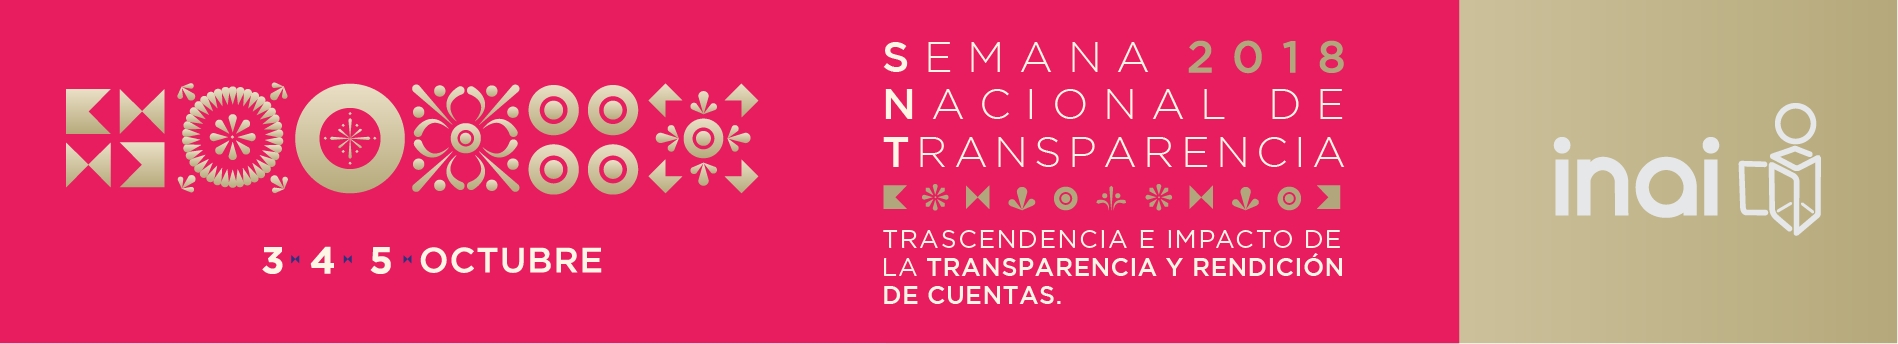 Invitan a la Semana Nacional de Transparencia 2018